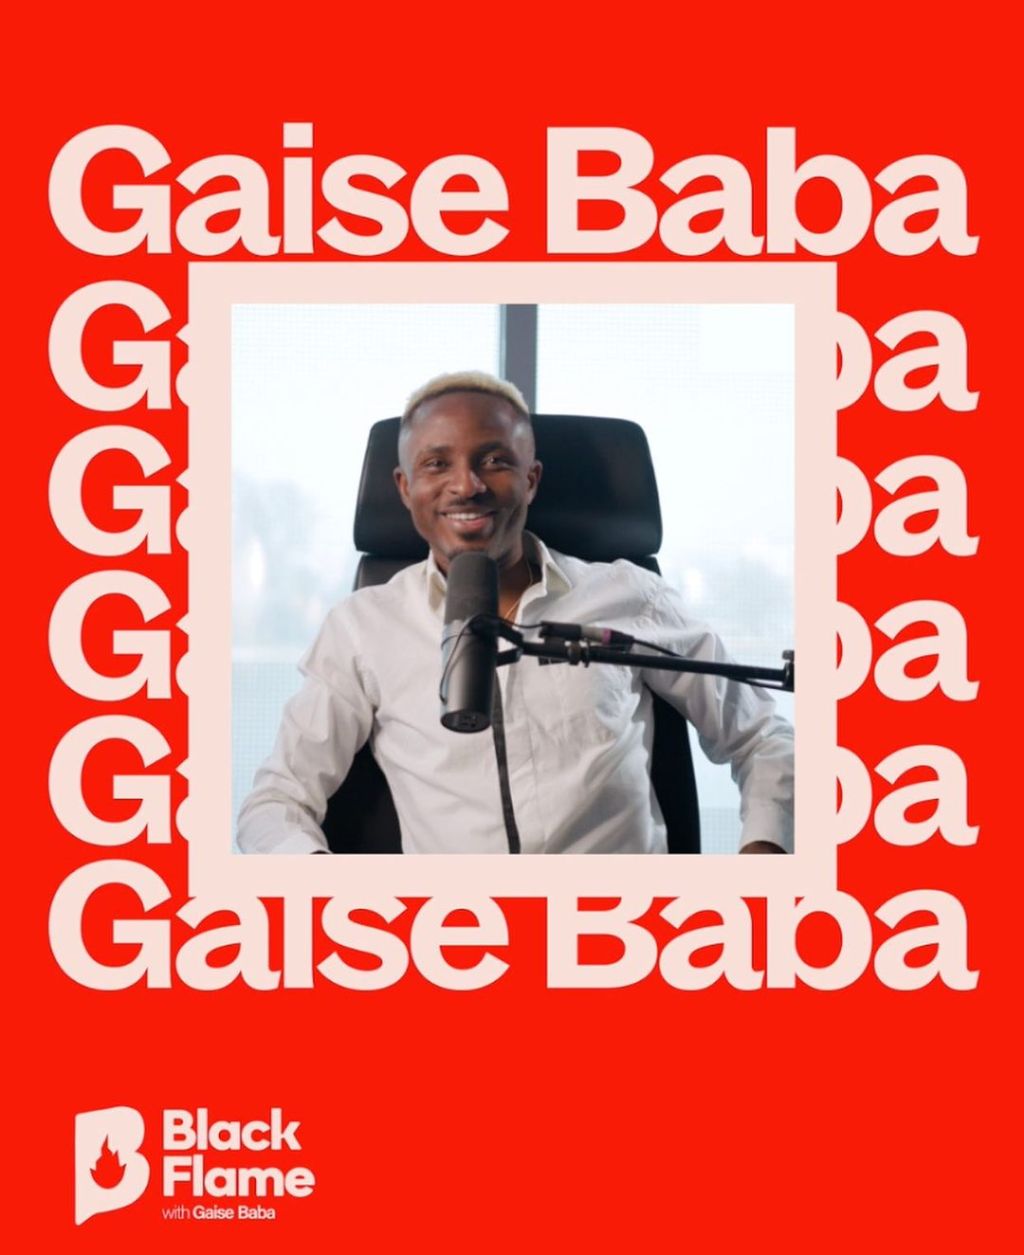 Gaise Baba kicks off “Black Flame” podcast